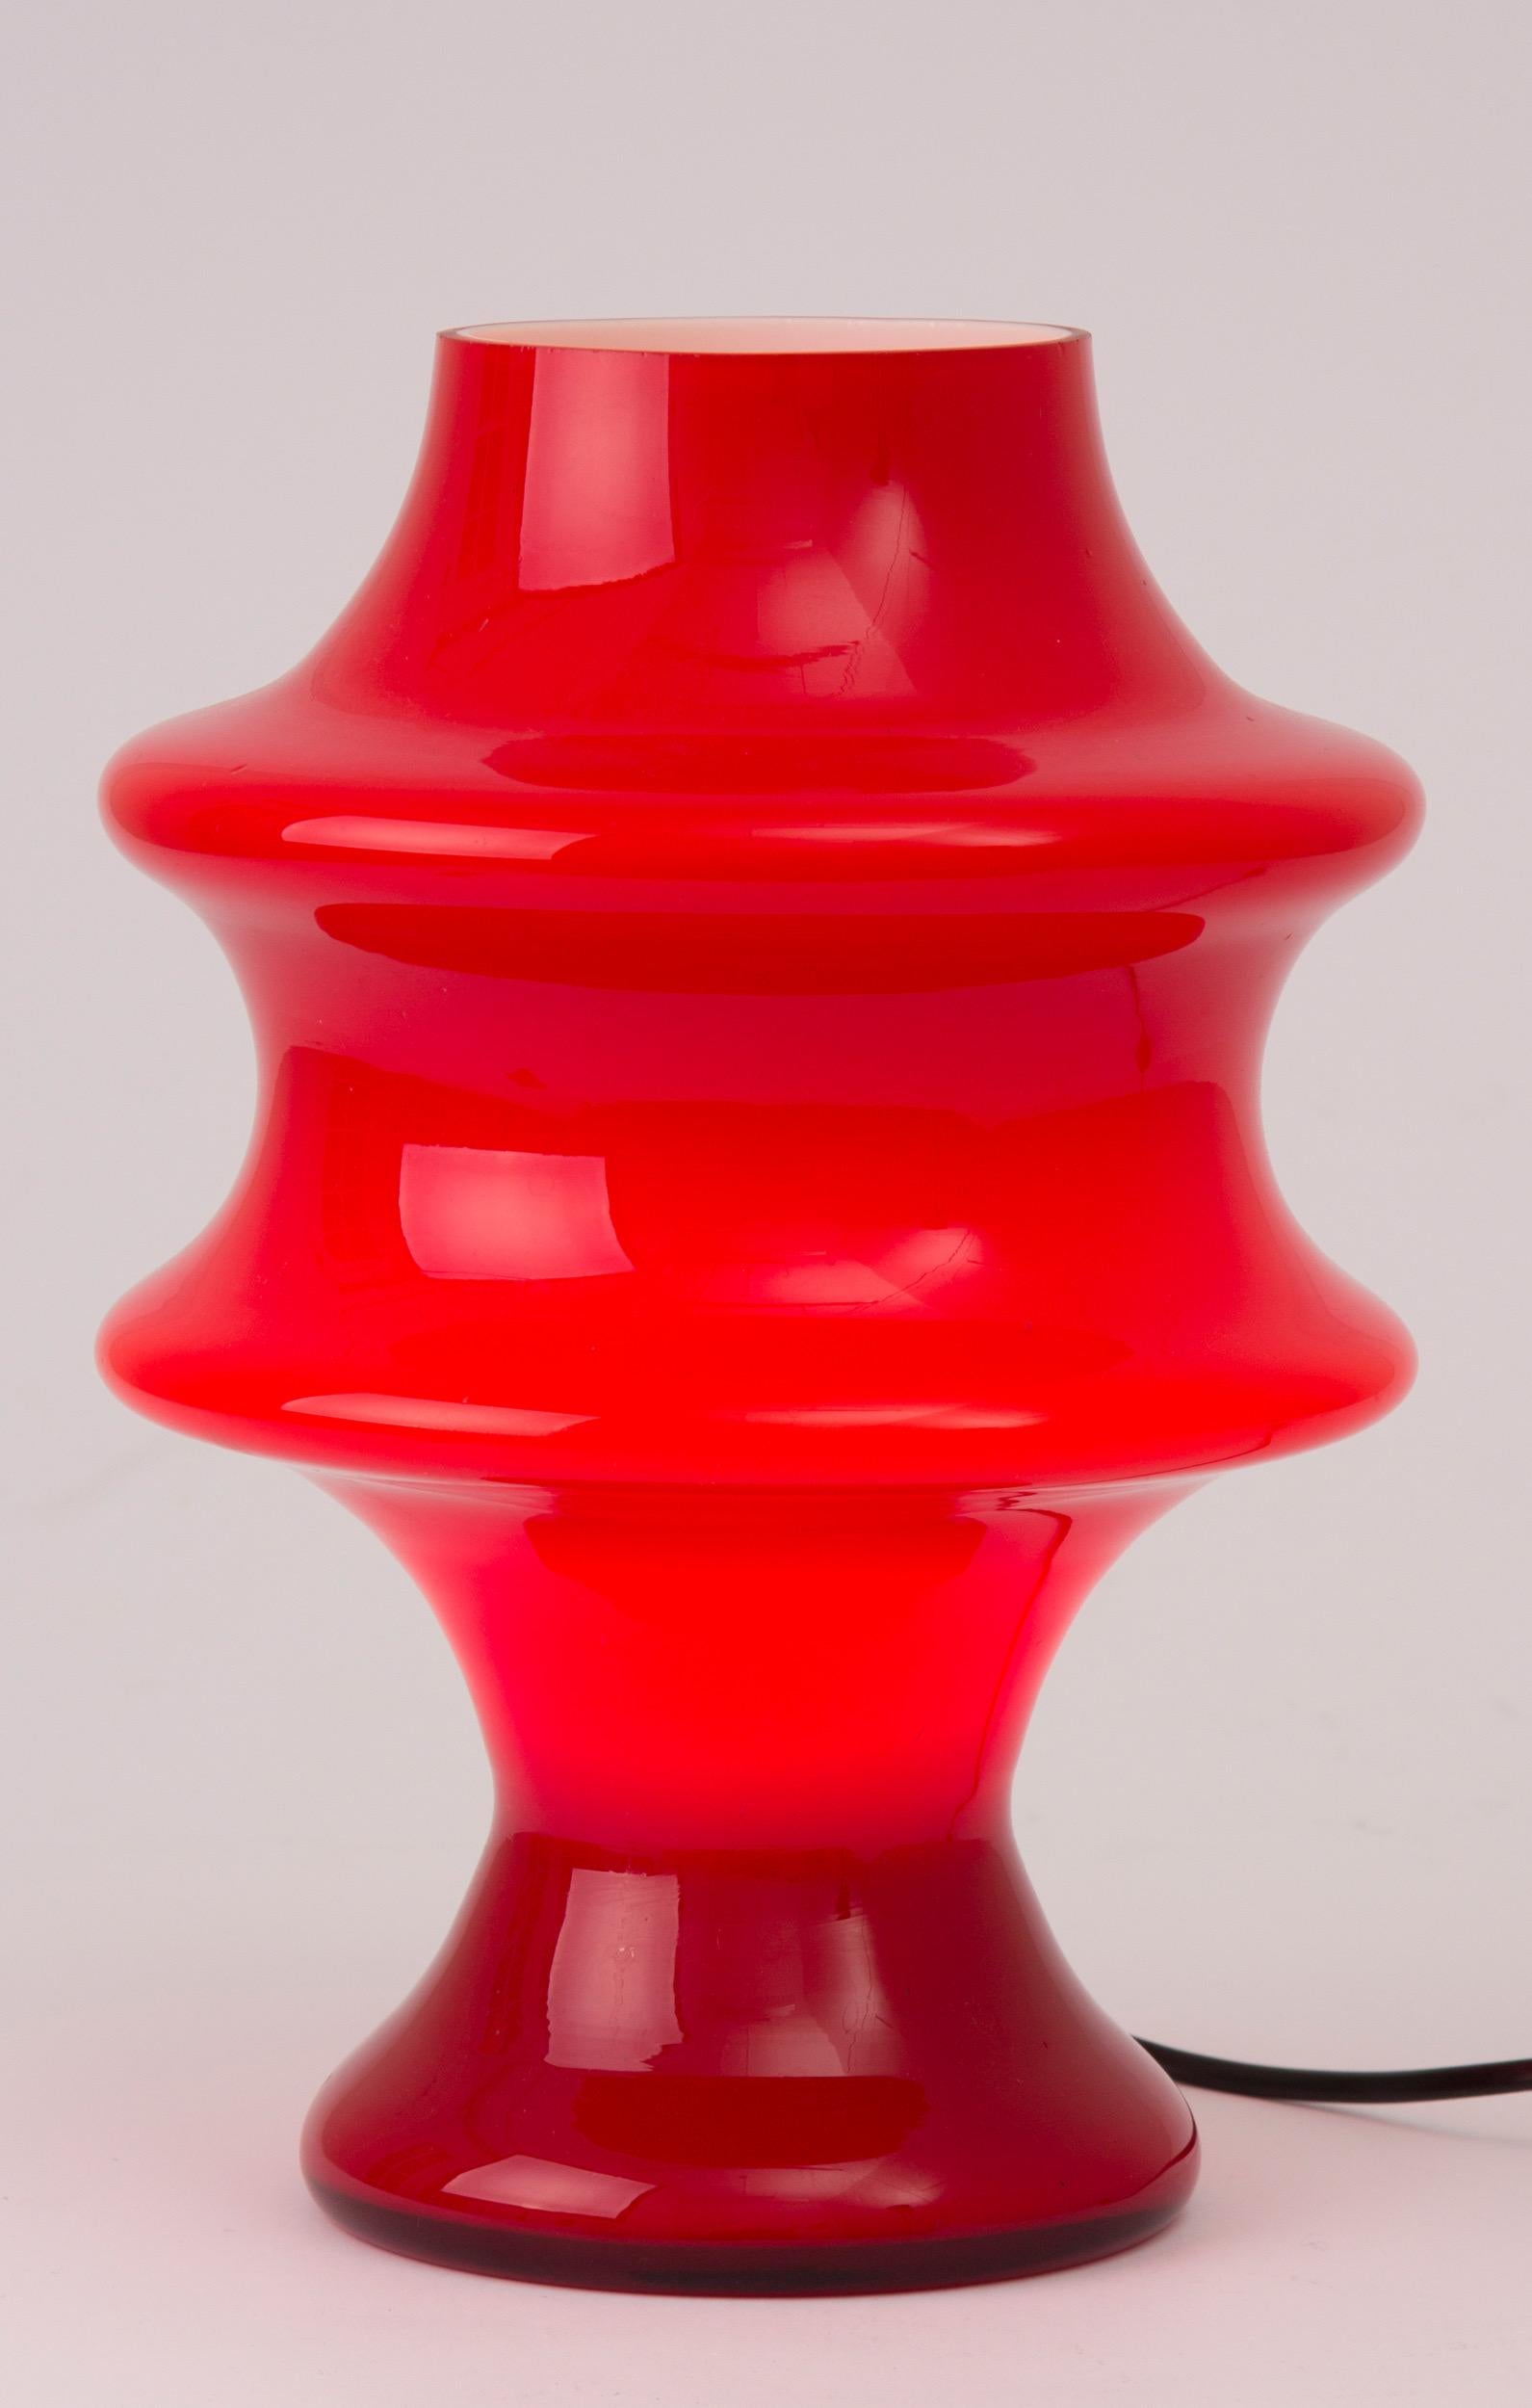 Midcentury cased glass table or desk lamp.
Midcentury modern design bright red cased glass lamp by Hustadt
Measures: H 31 cm, W 22 cm, D 22 cm
Germany, circa 1960.